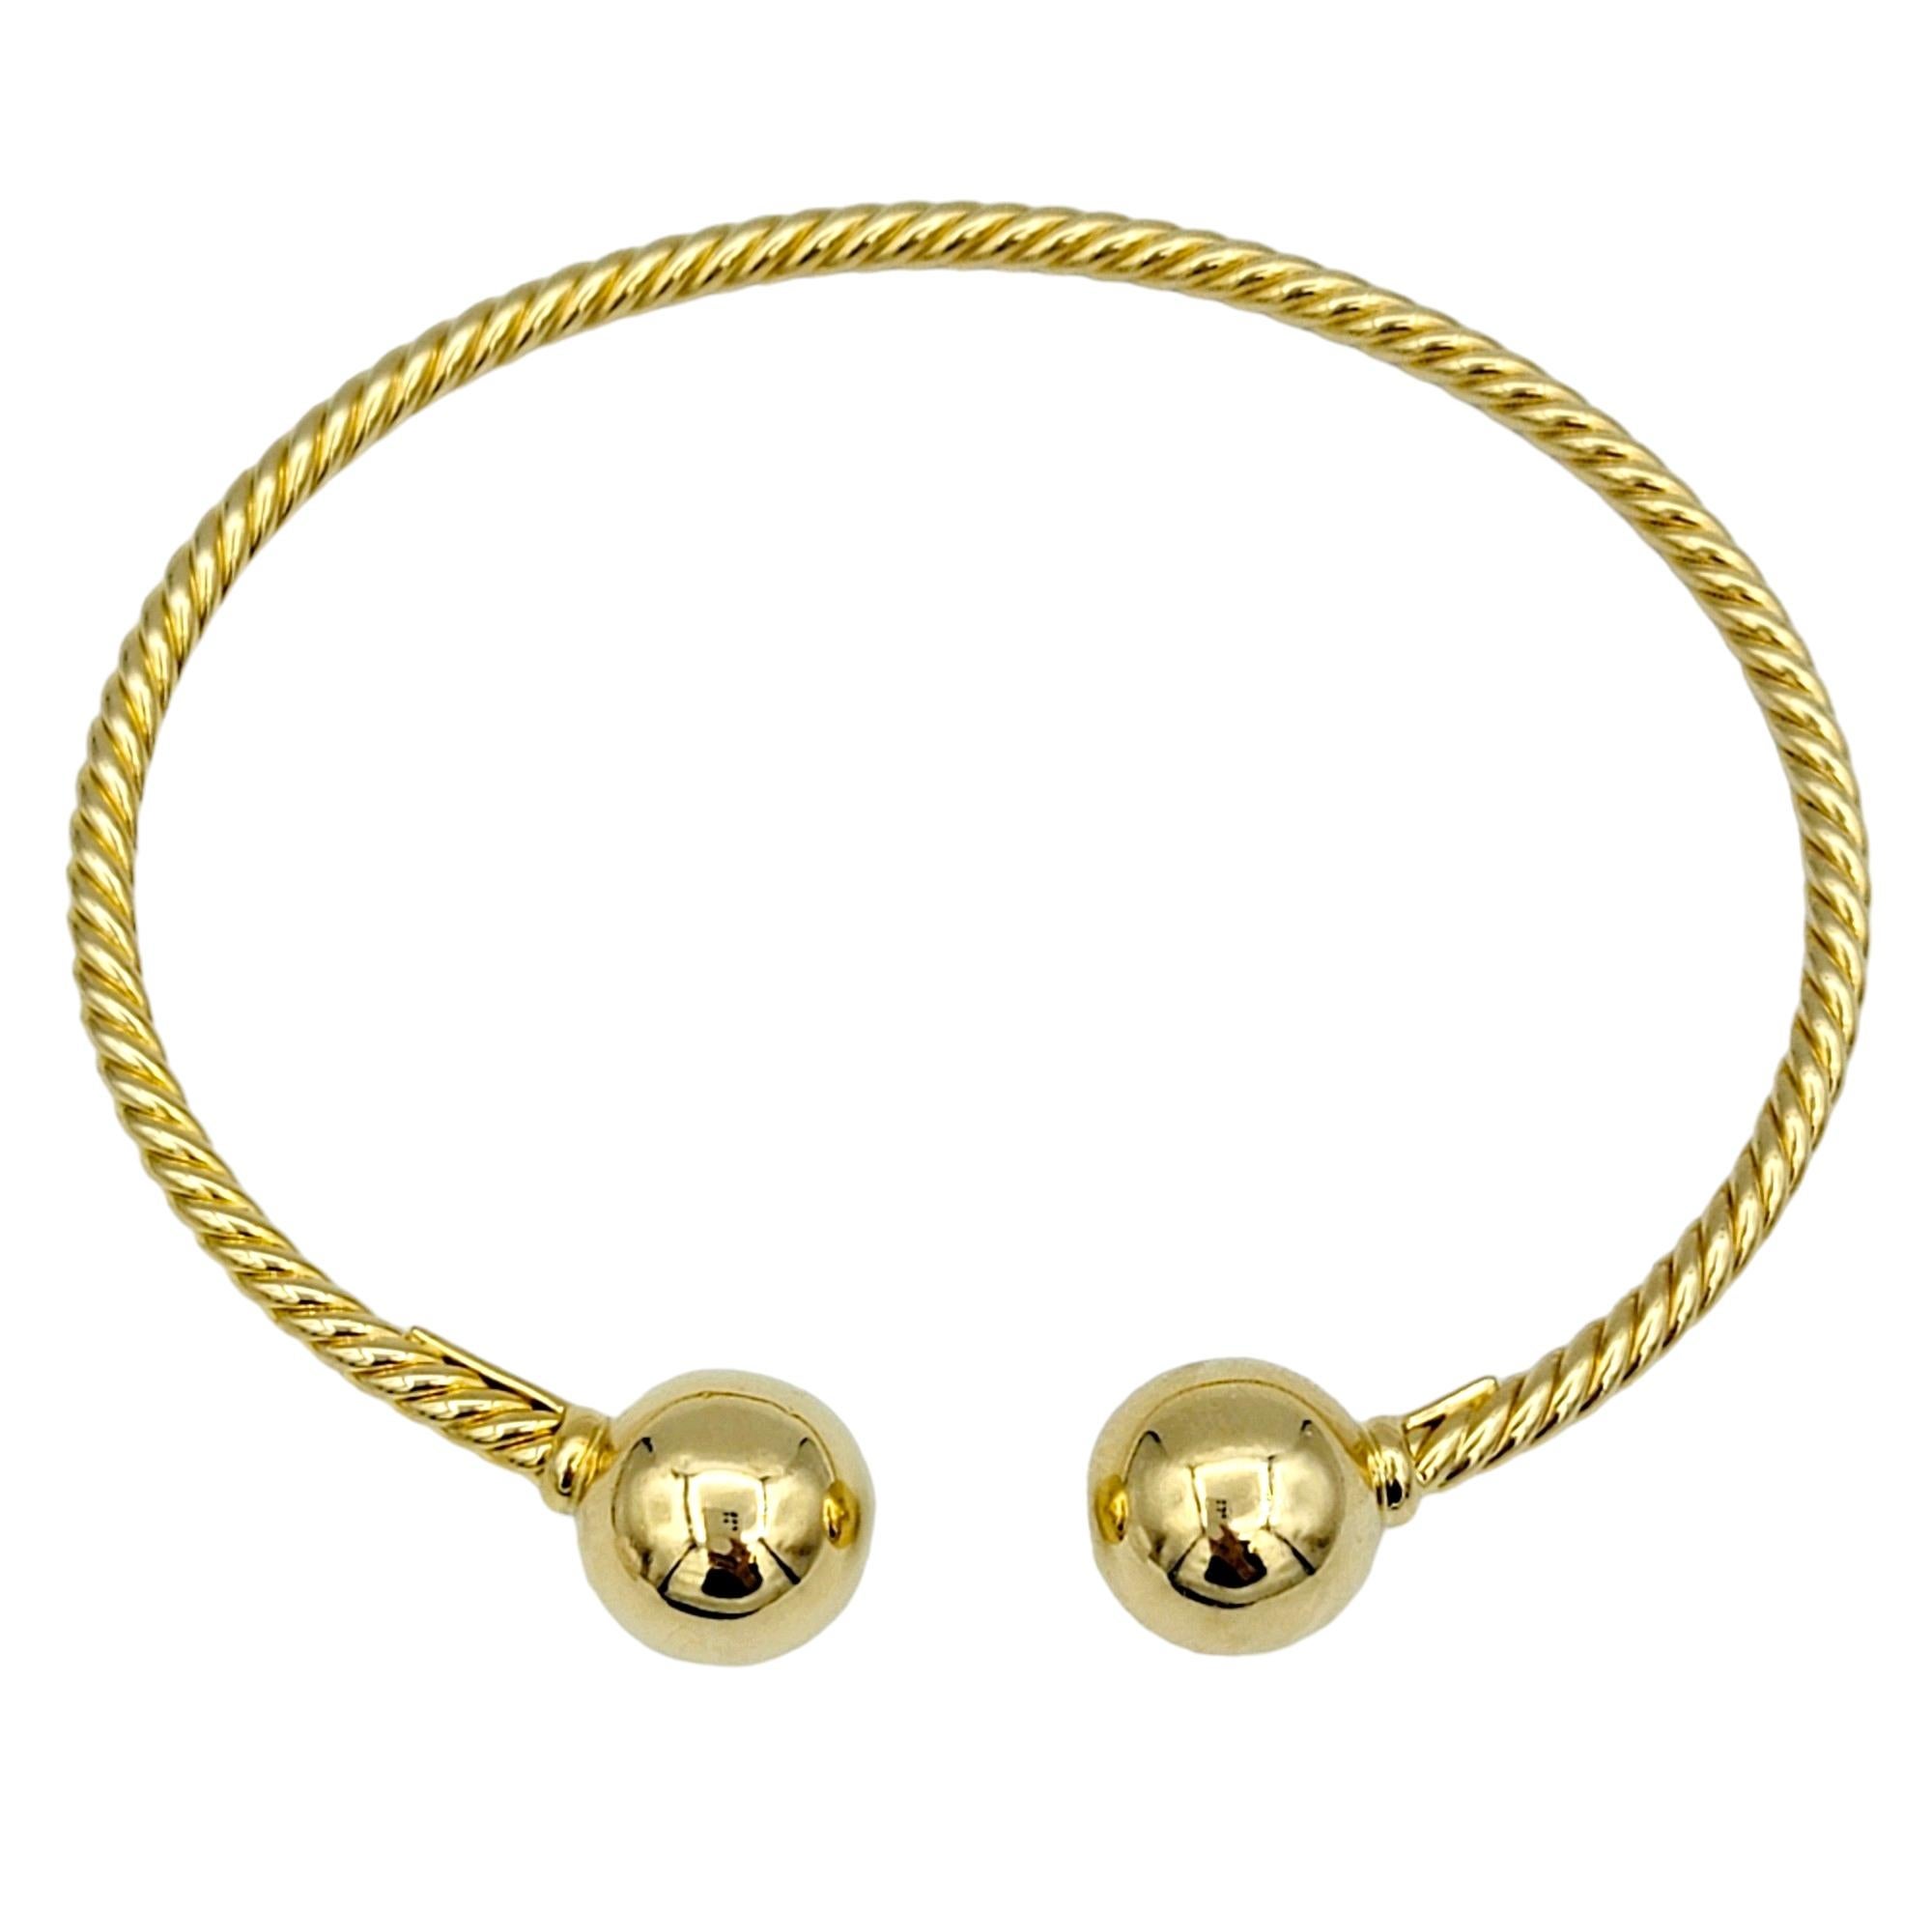 David Yurman Solari Cablespira Twisted Cuff Bracelet Set in 18 Karat Yellow Gold In Good Condition For Sale In Scottsdale, AZ